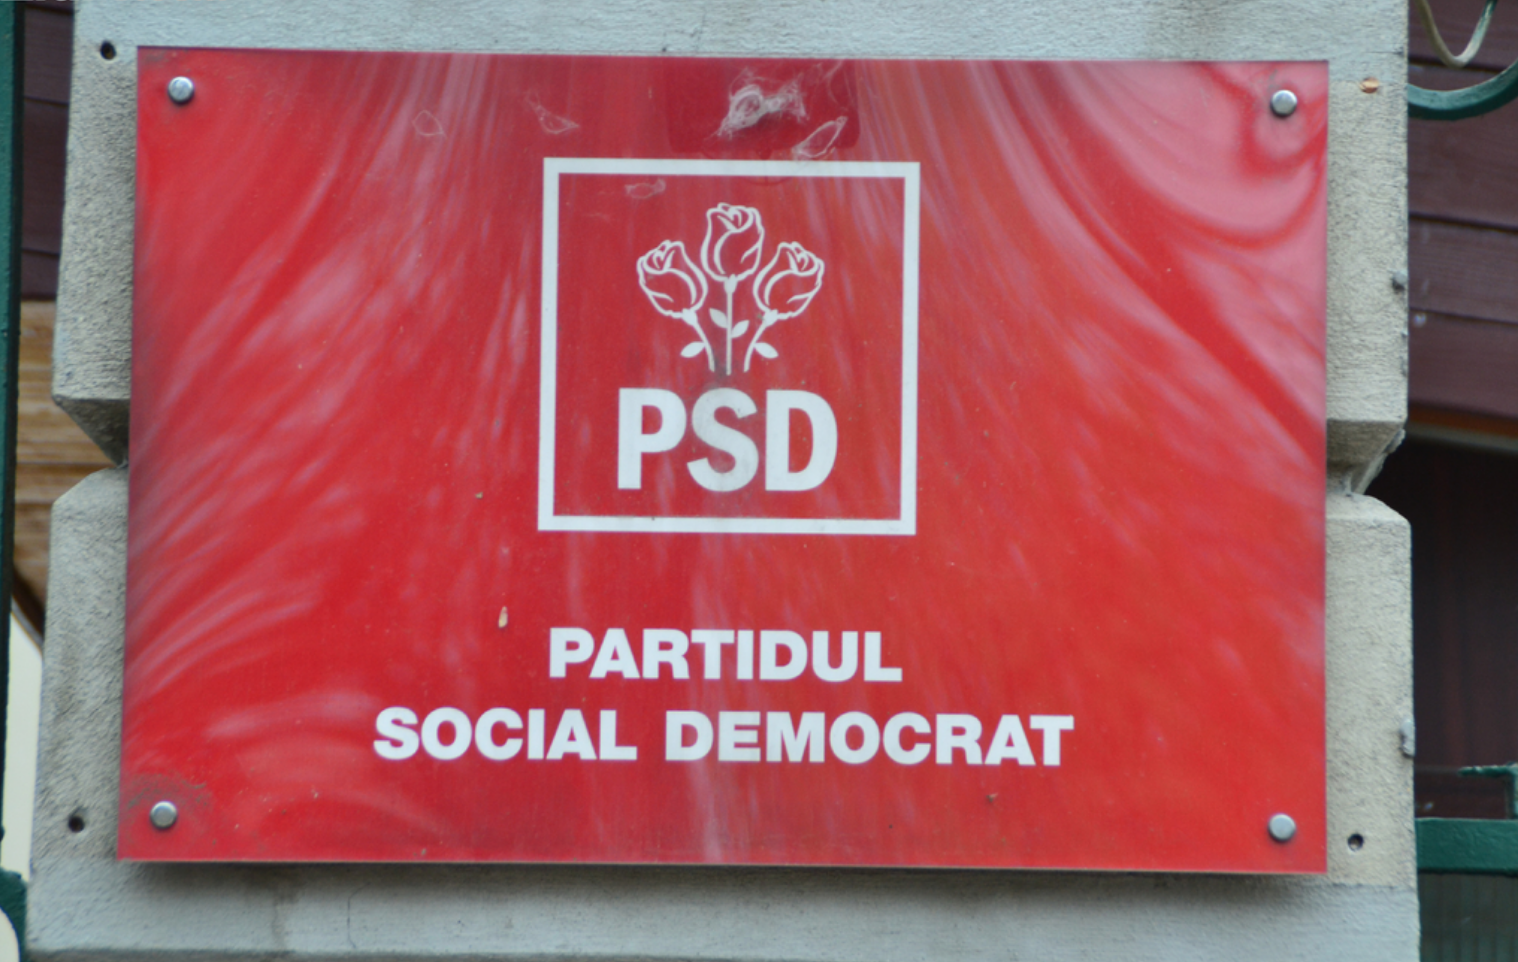 Dupa infrangerile electorale din ultimul an, PSD vrea congres restrans